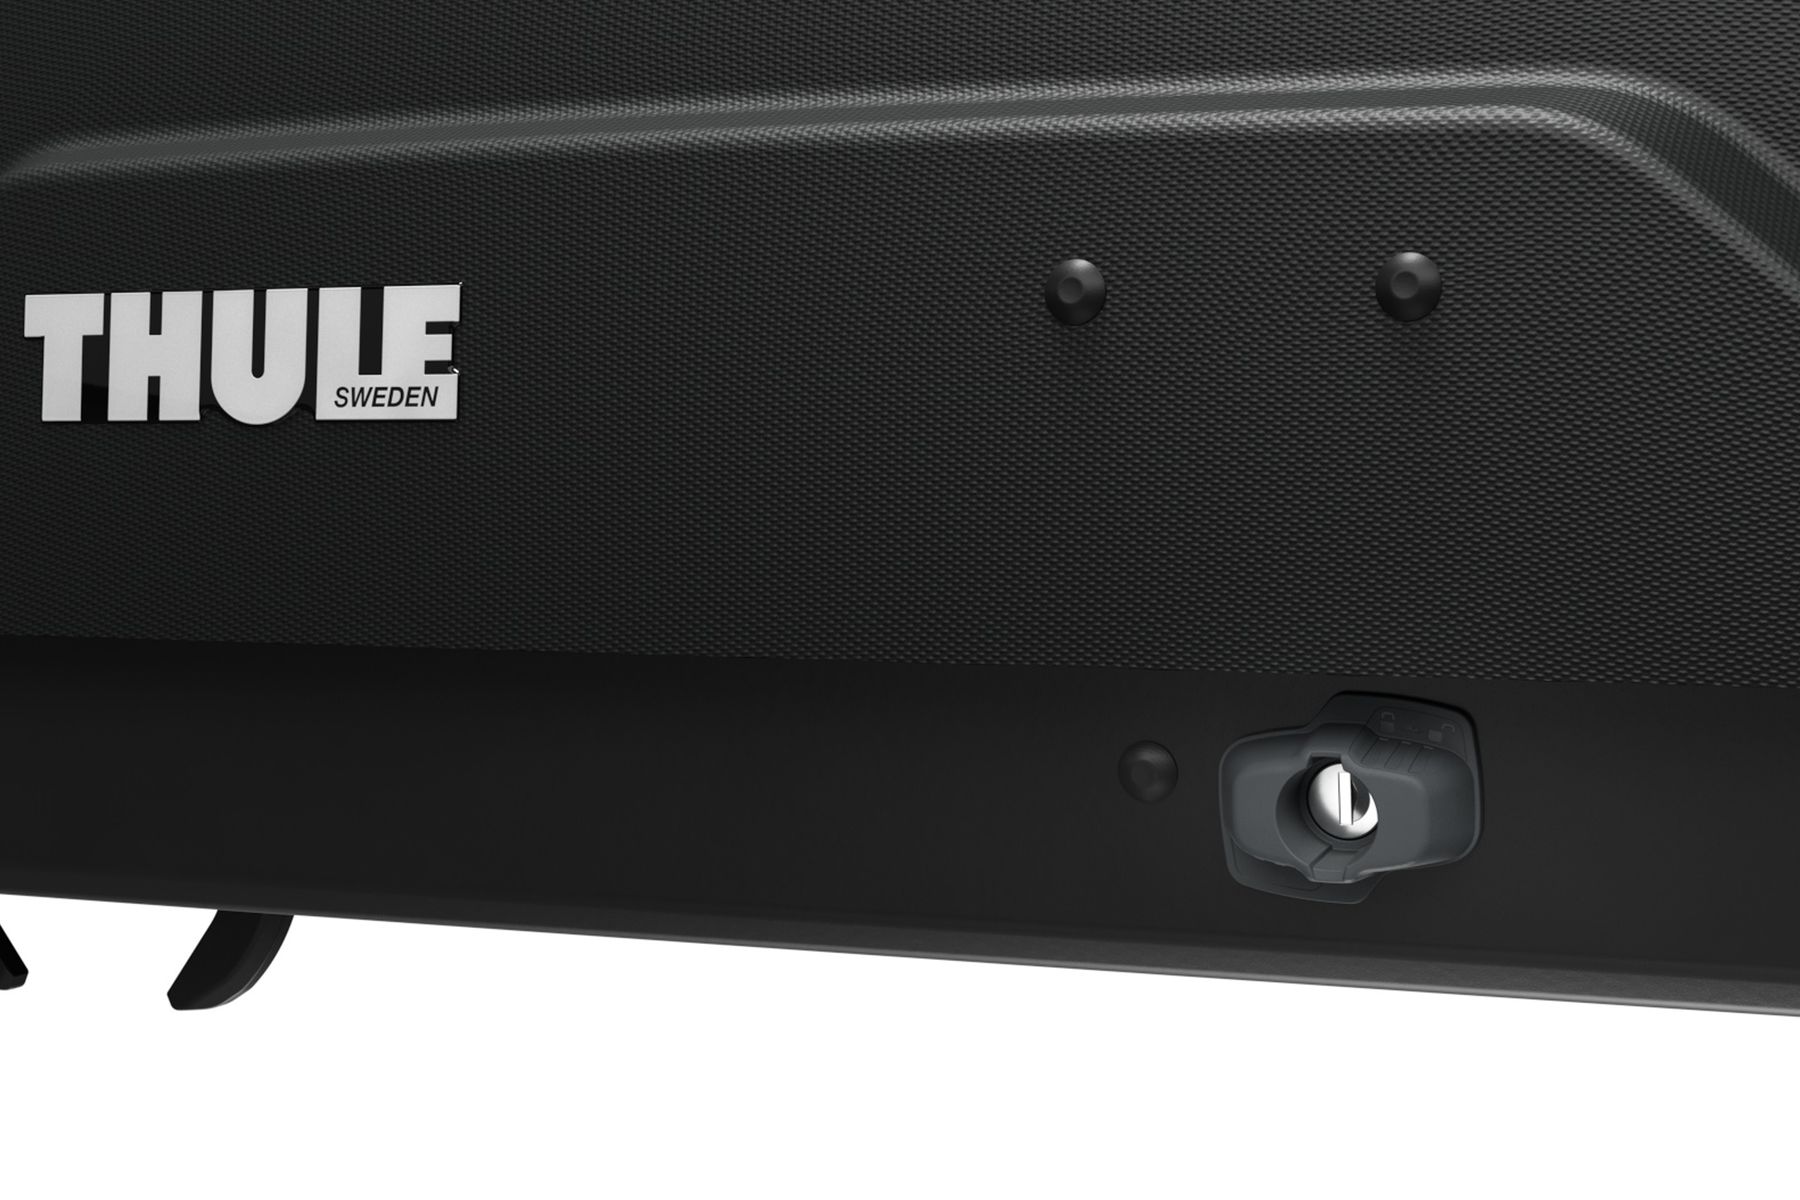 Thule Force XT Alpine 635500 key protector